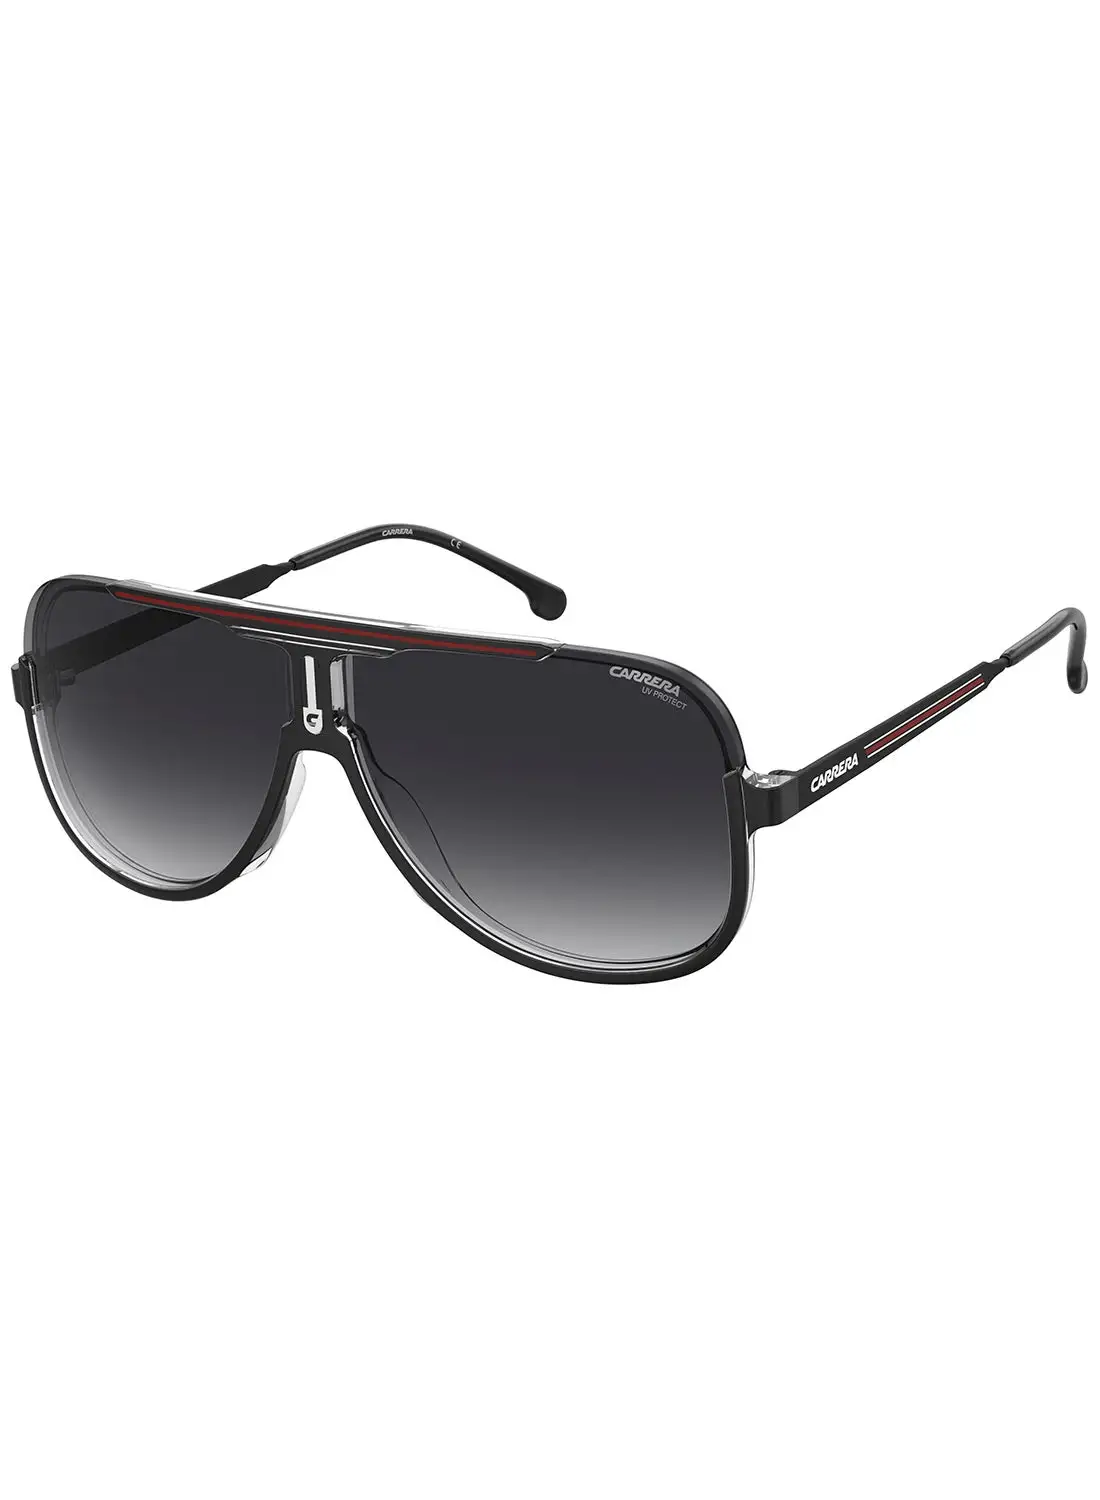 Carrera Men's UV Protection Square Sunglasses - Carrera 1059/S Black Millimeter - Lens Size: 64 Mm